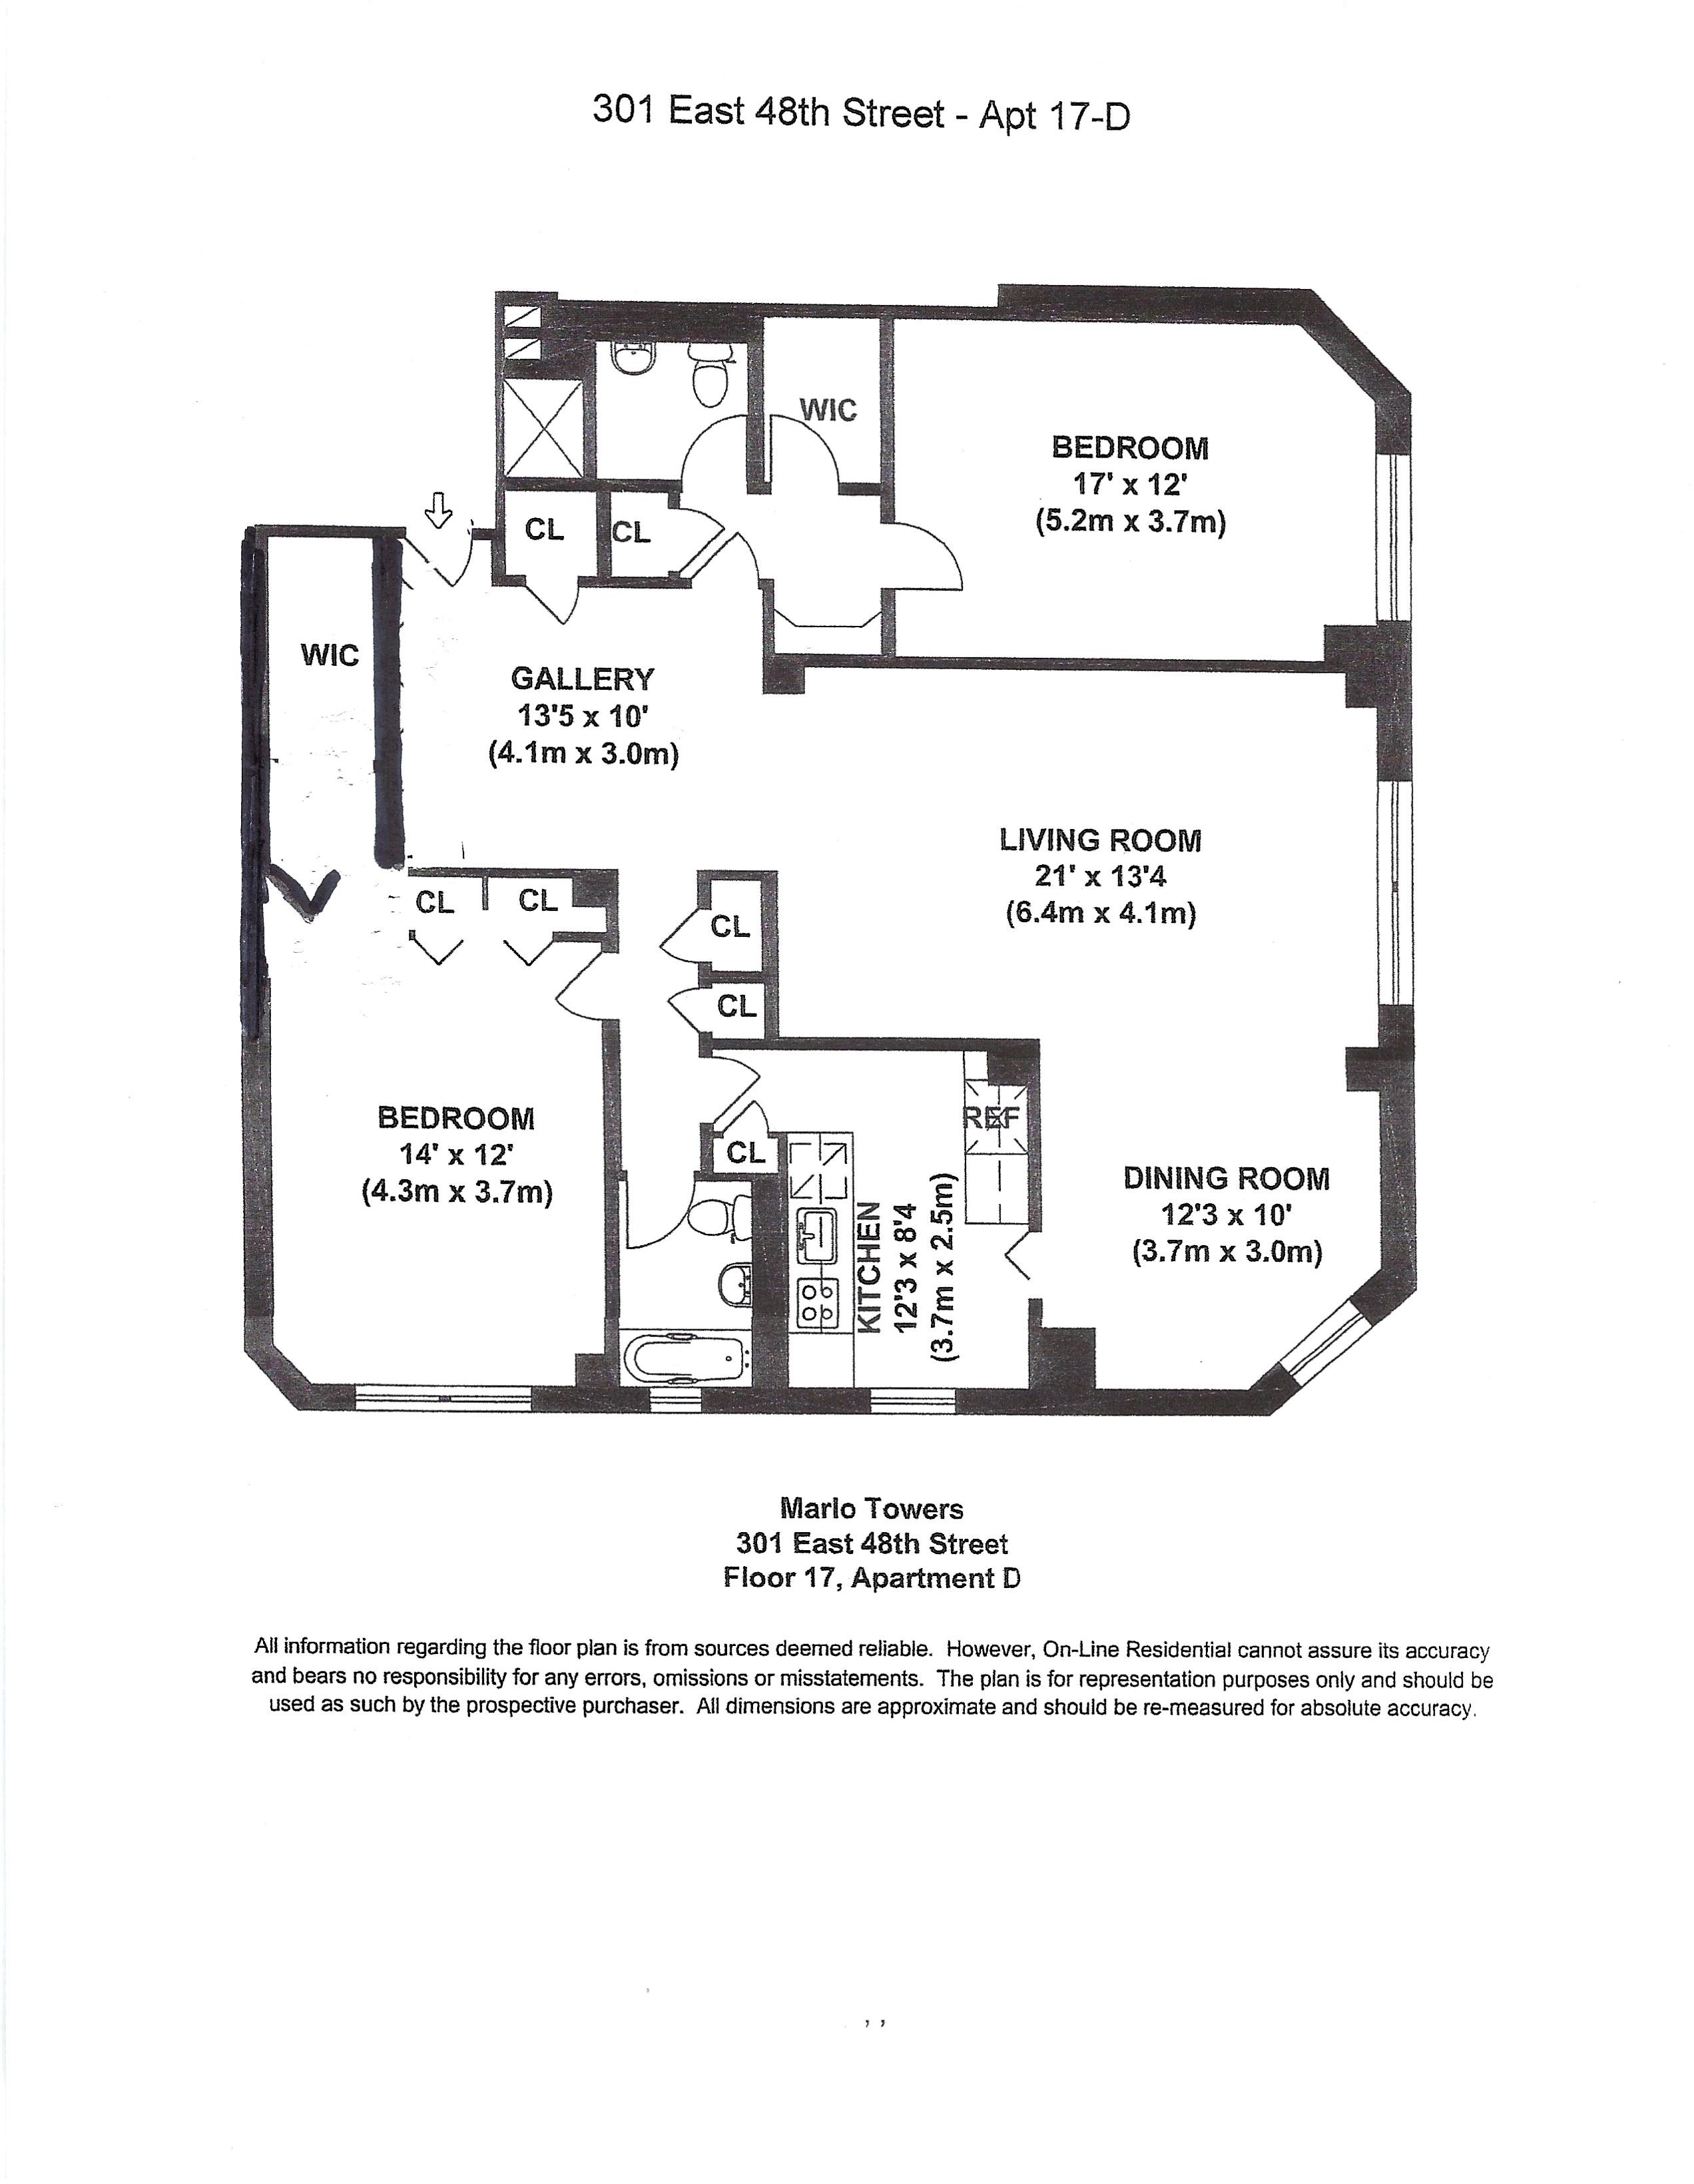 Floorplan for 301 East 48th Street, 17-D